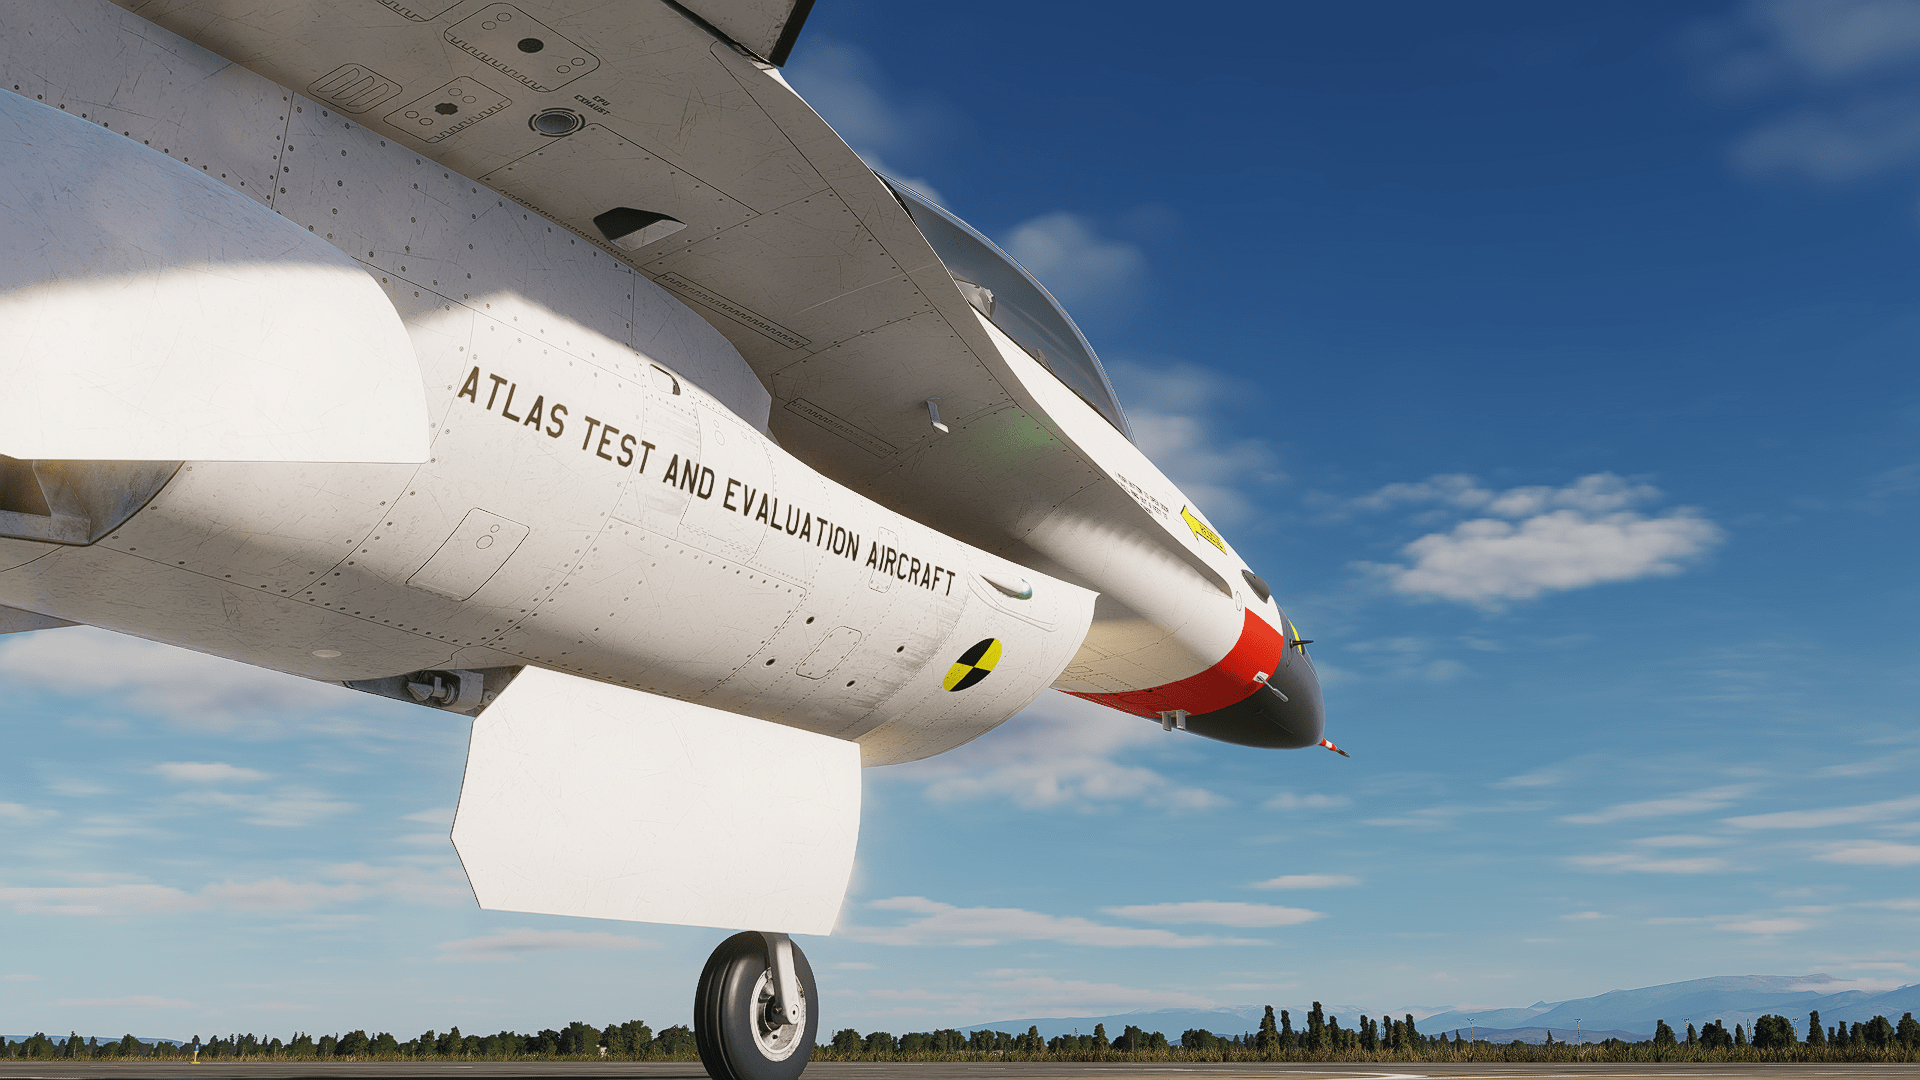  Atlas - F16 Test aircraft